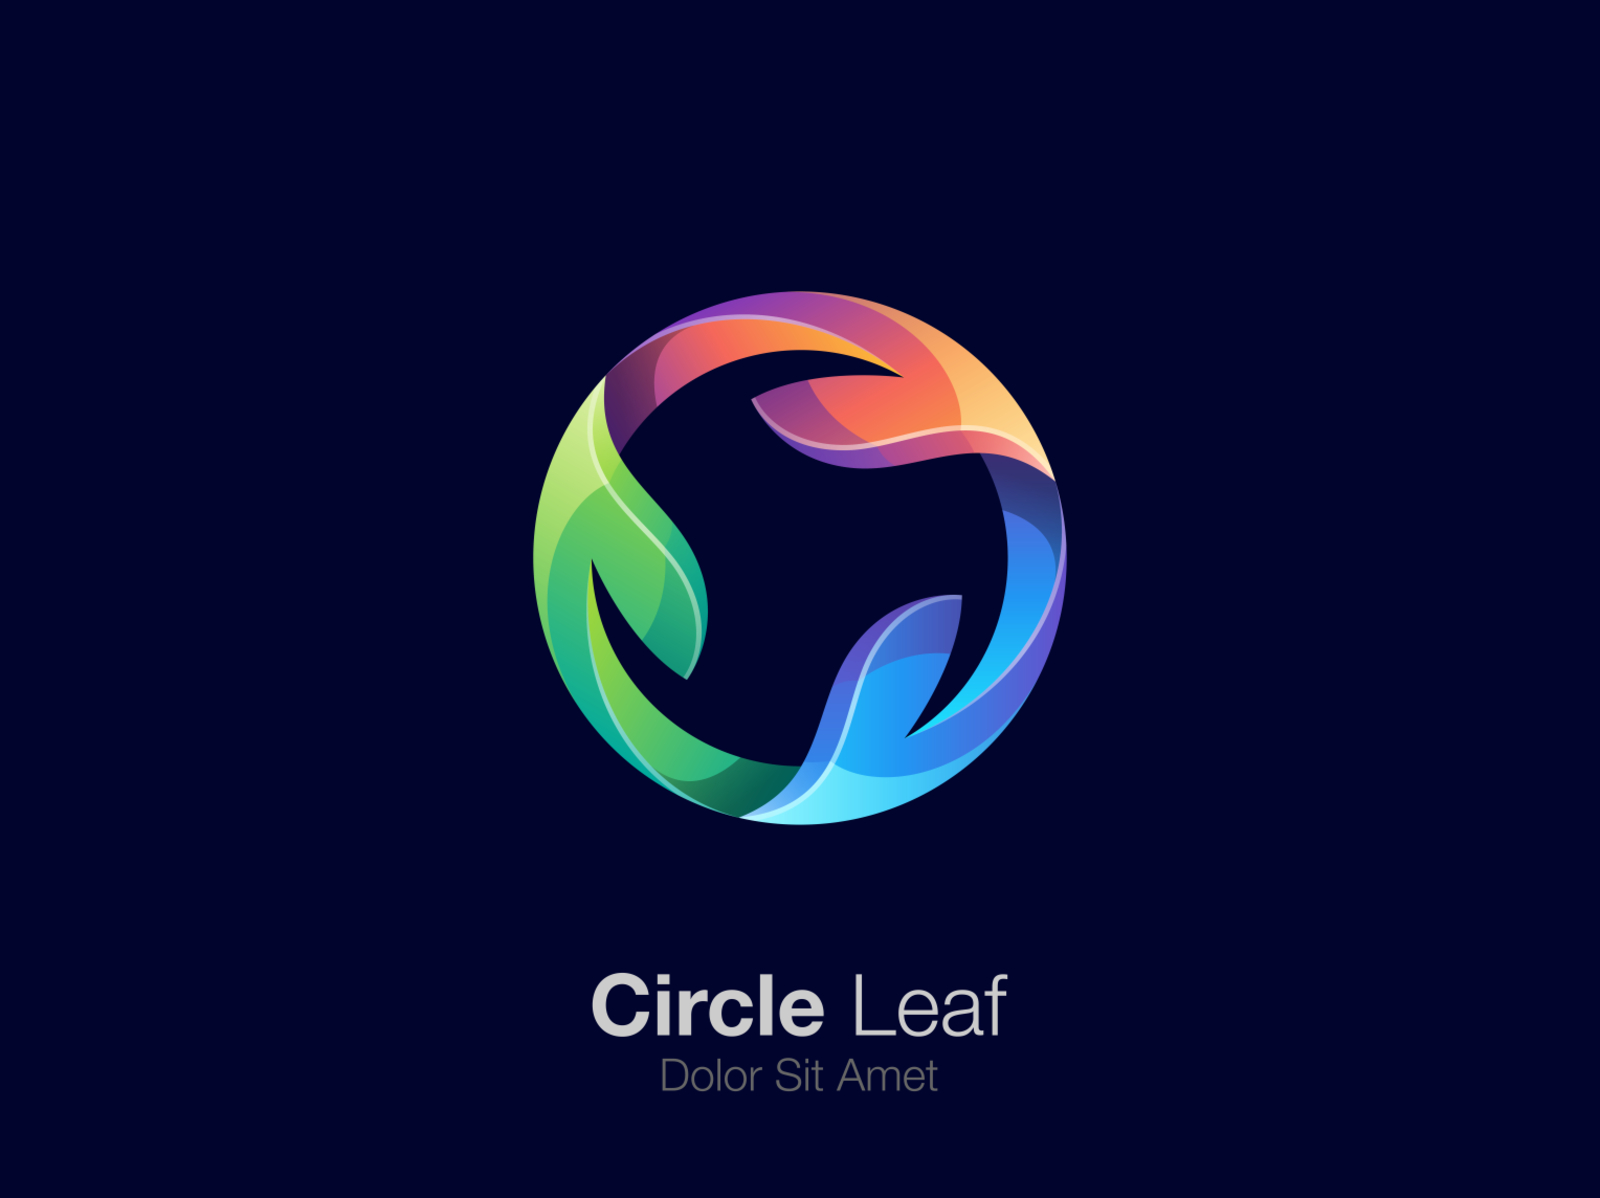 circle geometric leaf logo vector - Stock Image - Everypixel